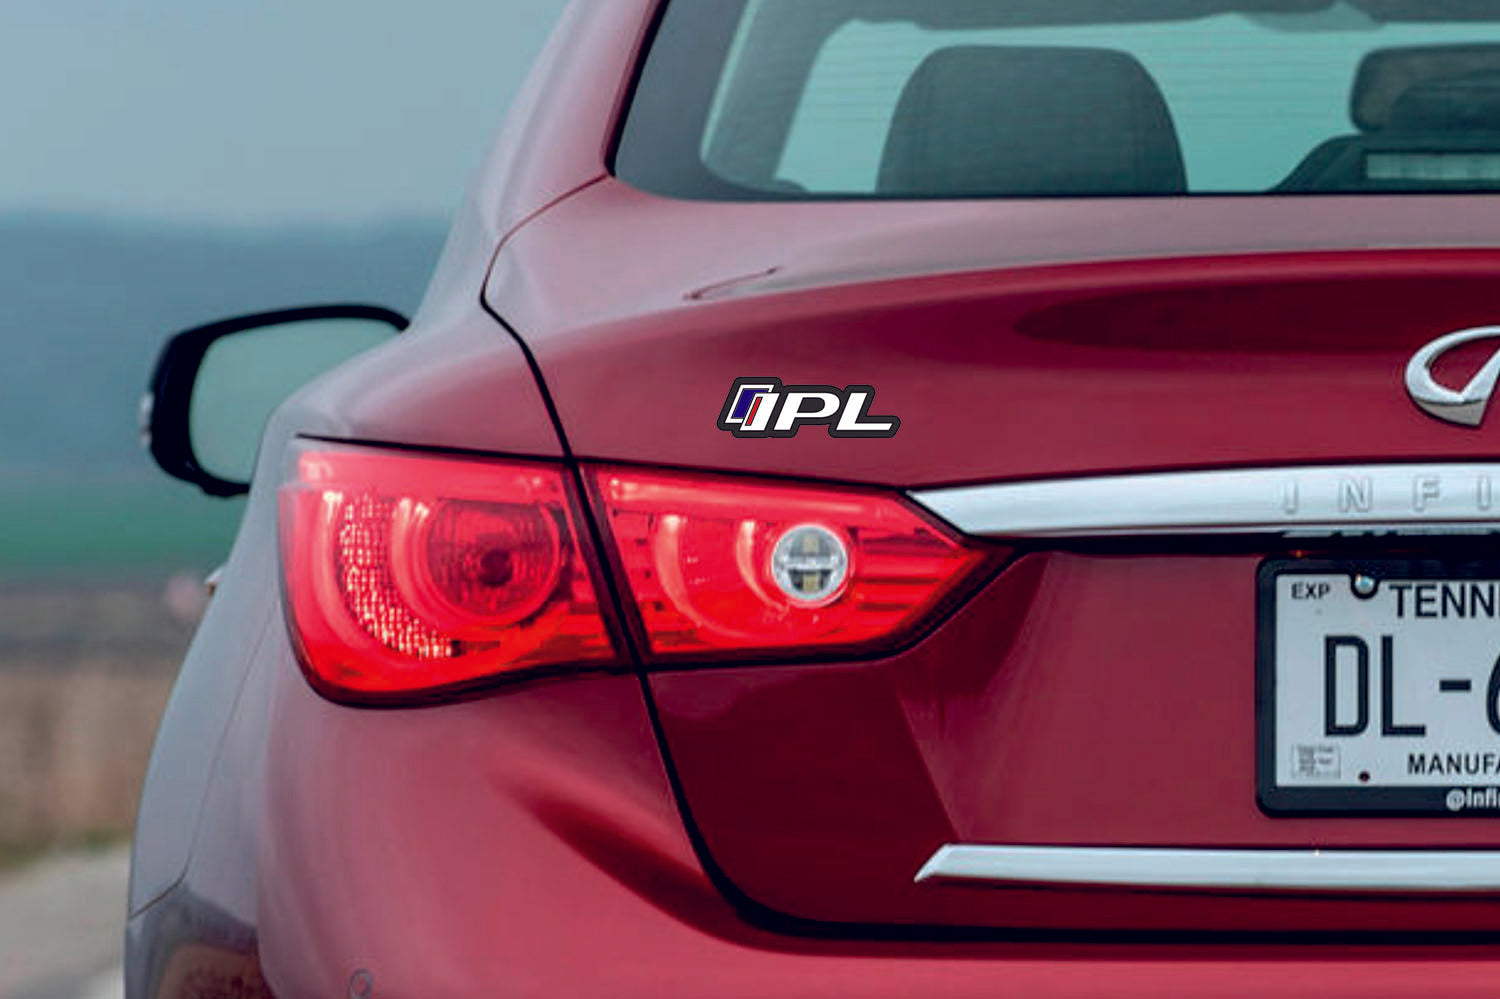 Infiniti tailgate trunk rear emblem with IPL logo - decoinfabric